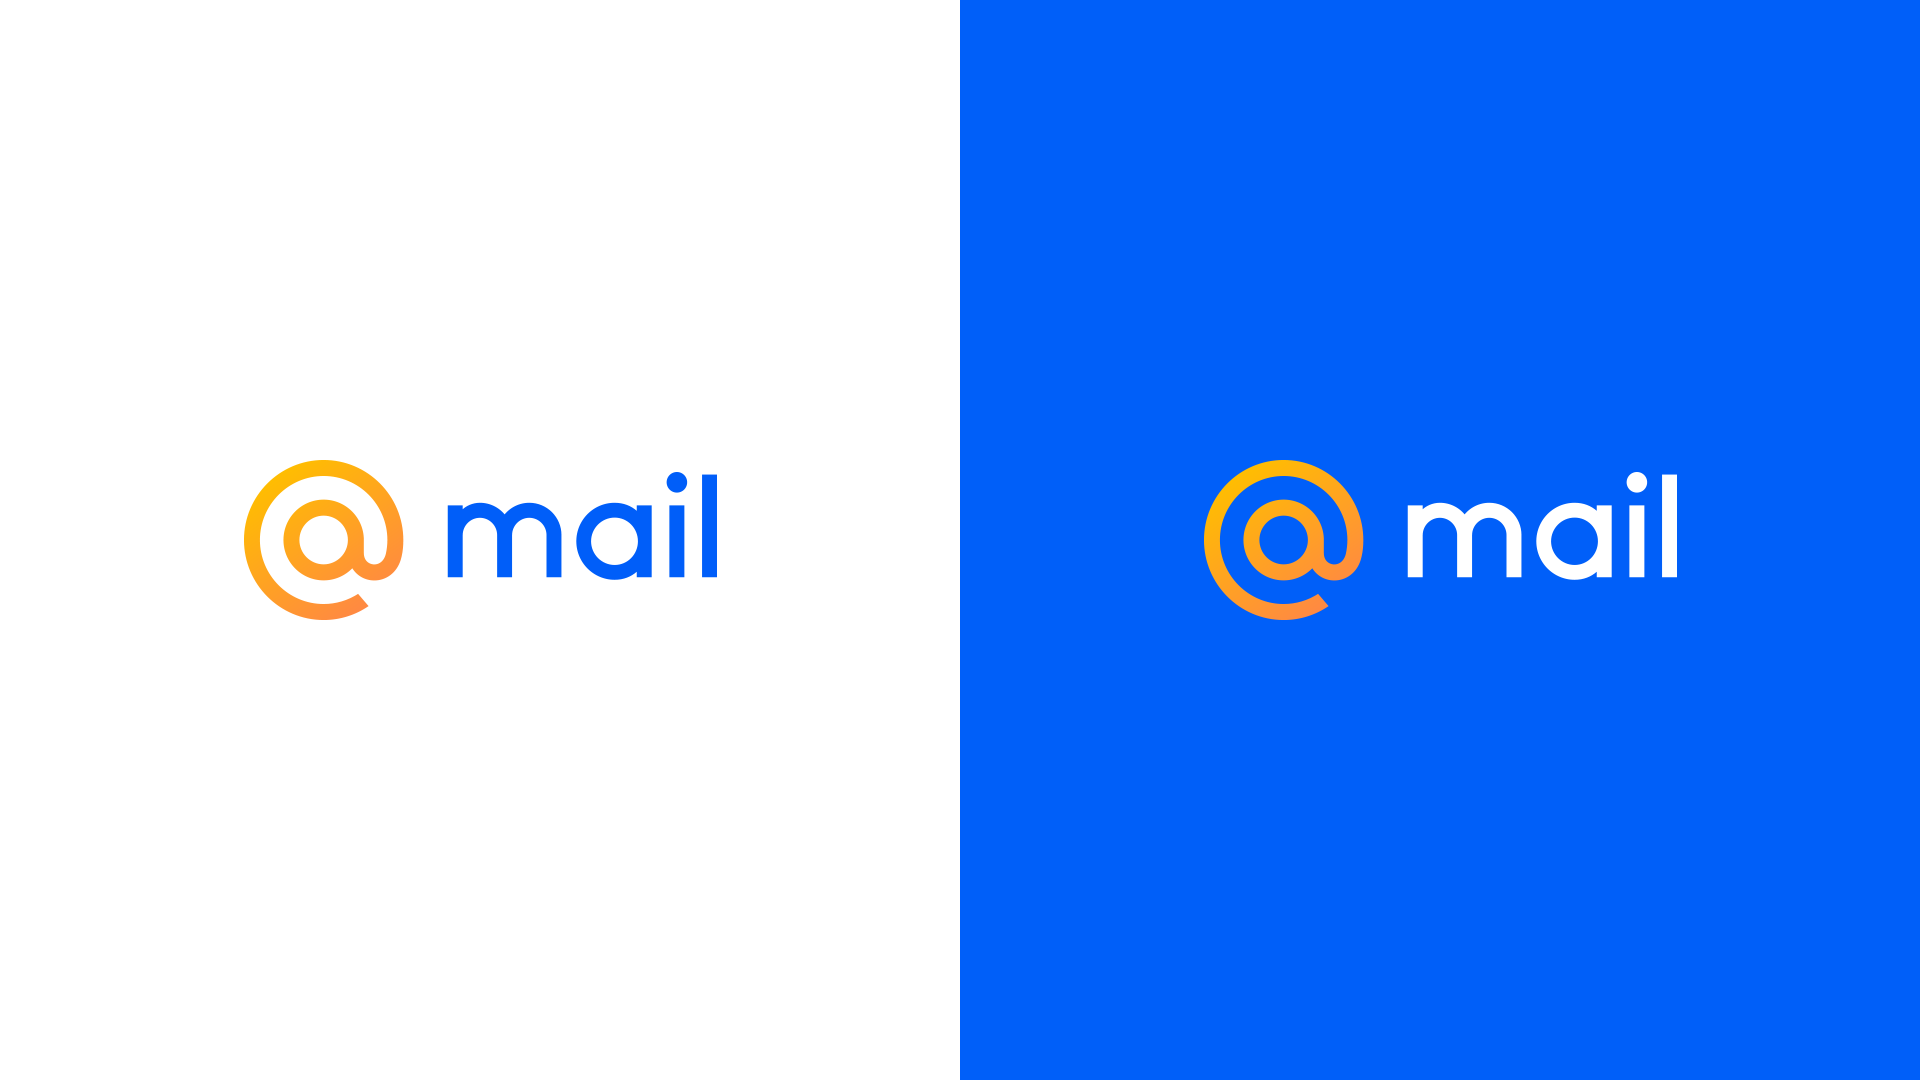 VK / У Mail.Ru новый логотип